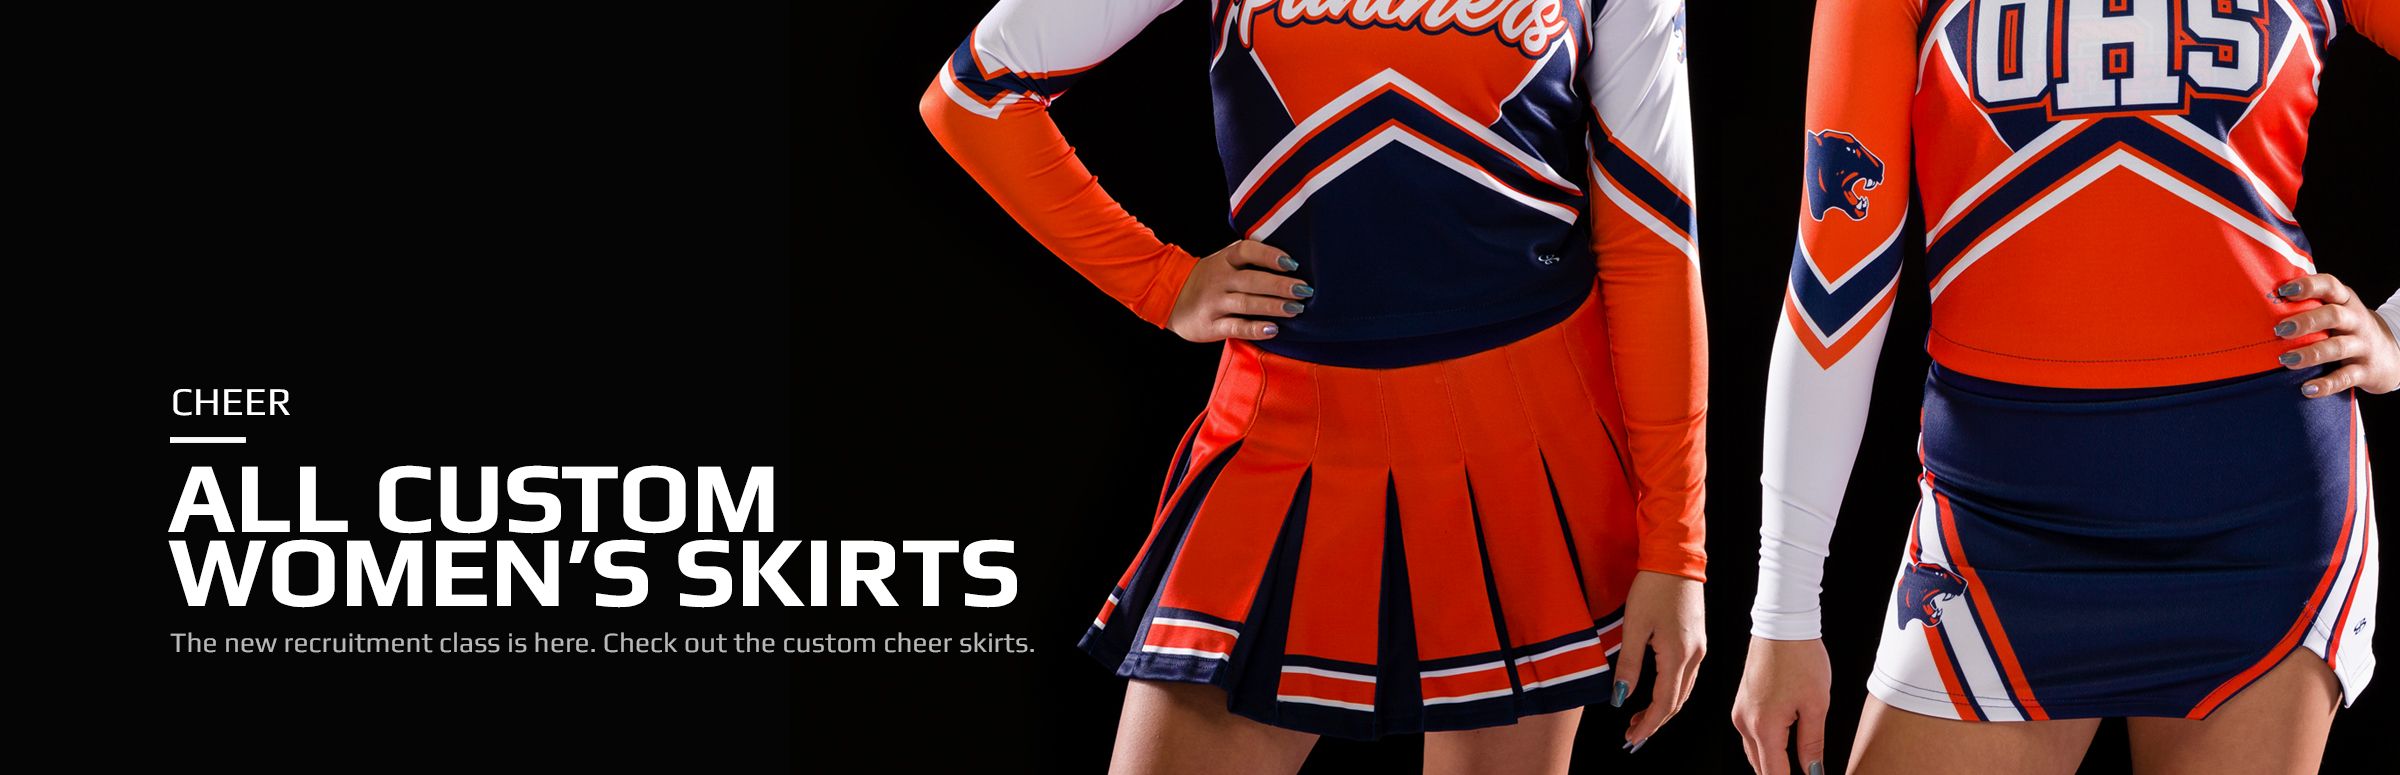 All Custom Women's Cheer Skirts